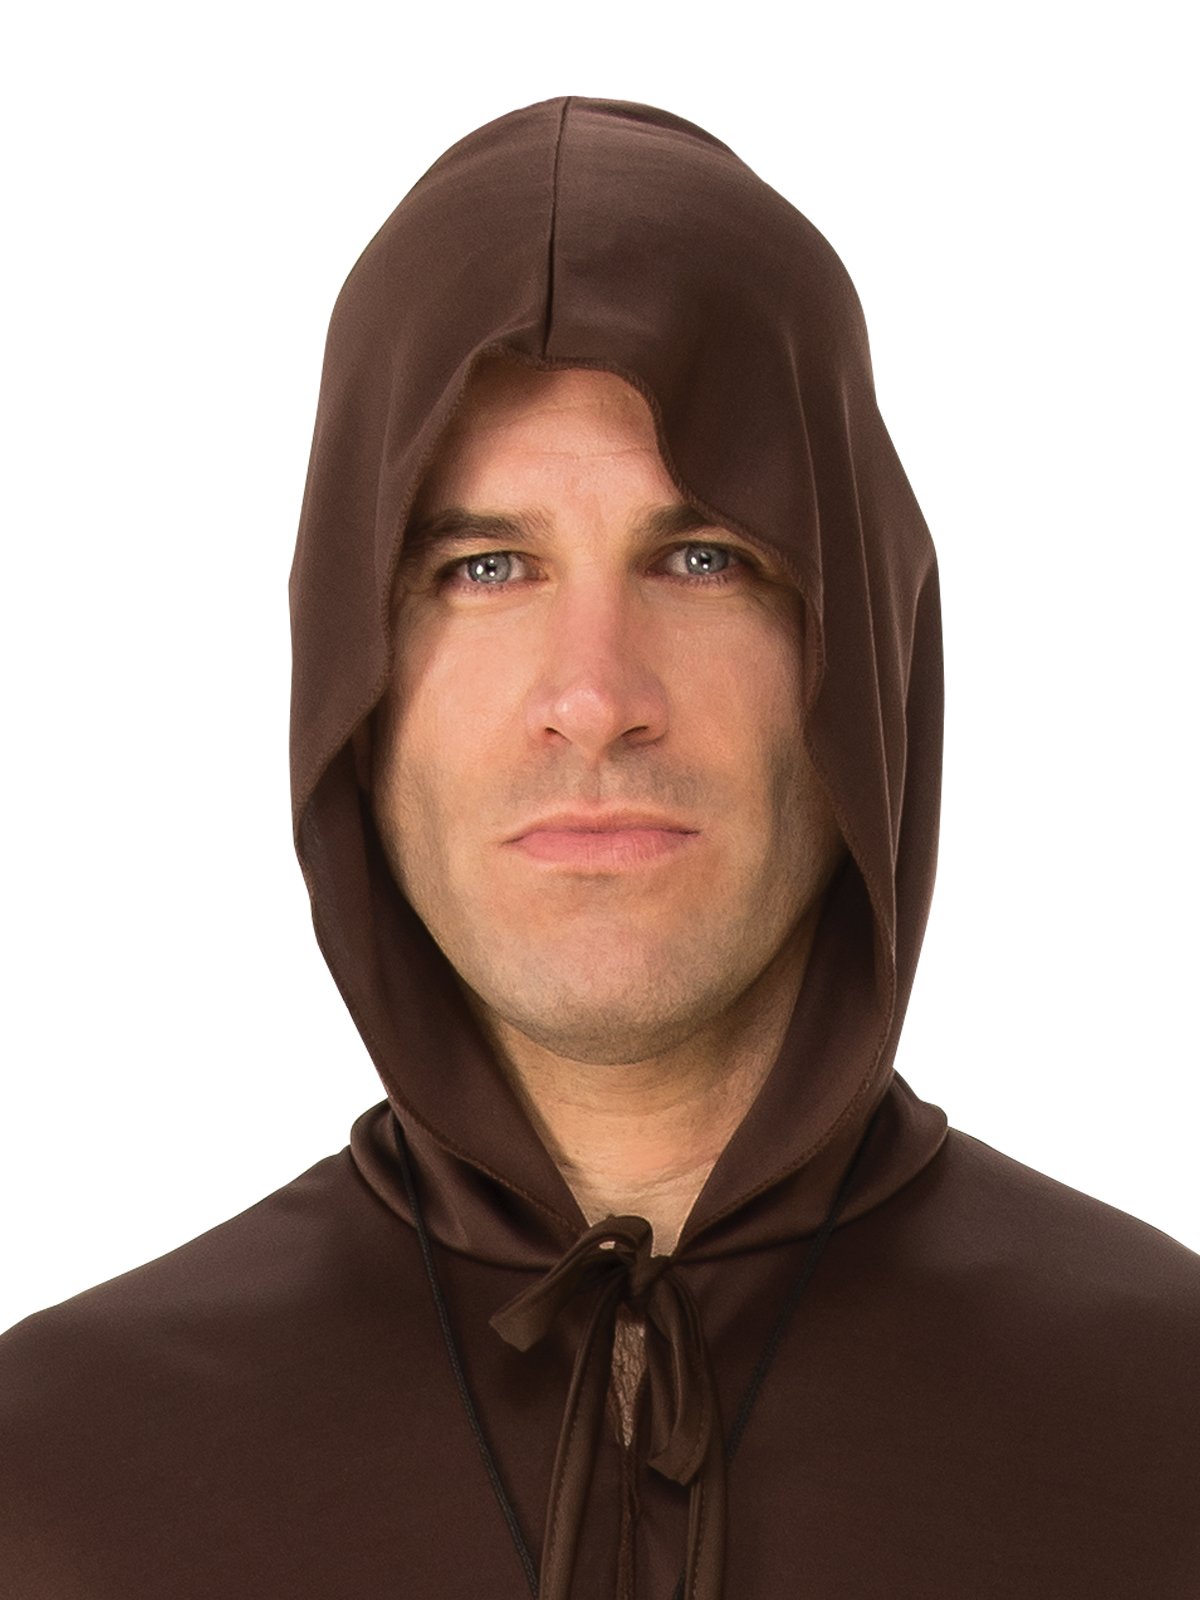 Costume Adult Monk Religion/Biblical Large